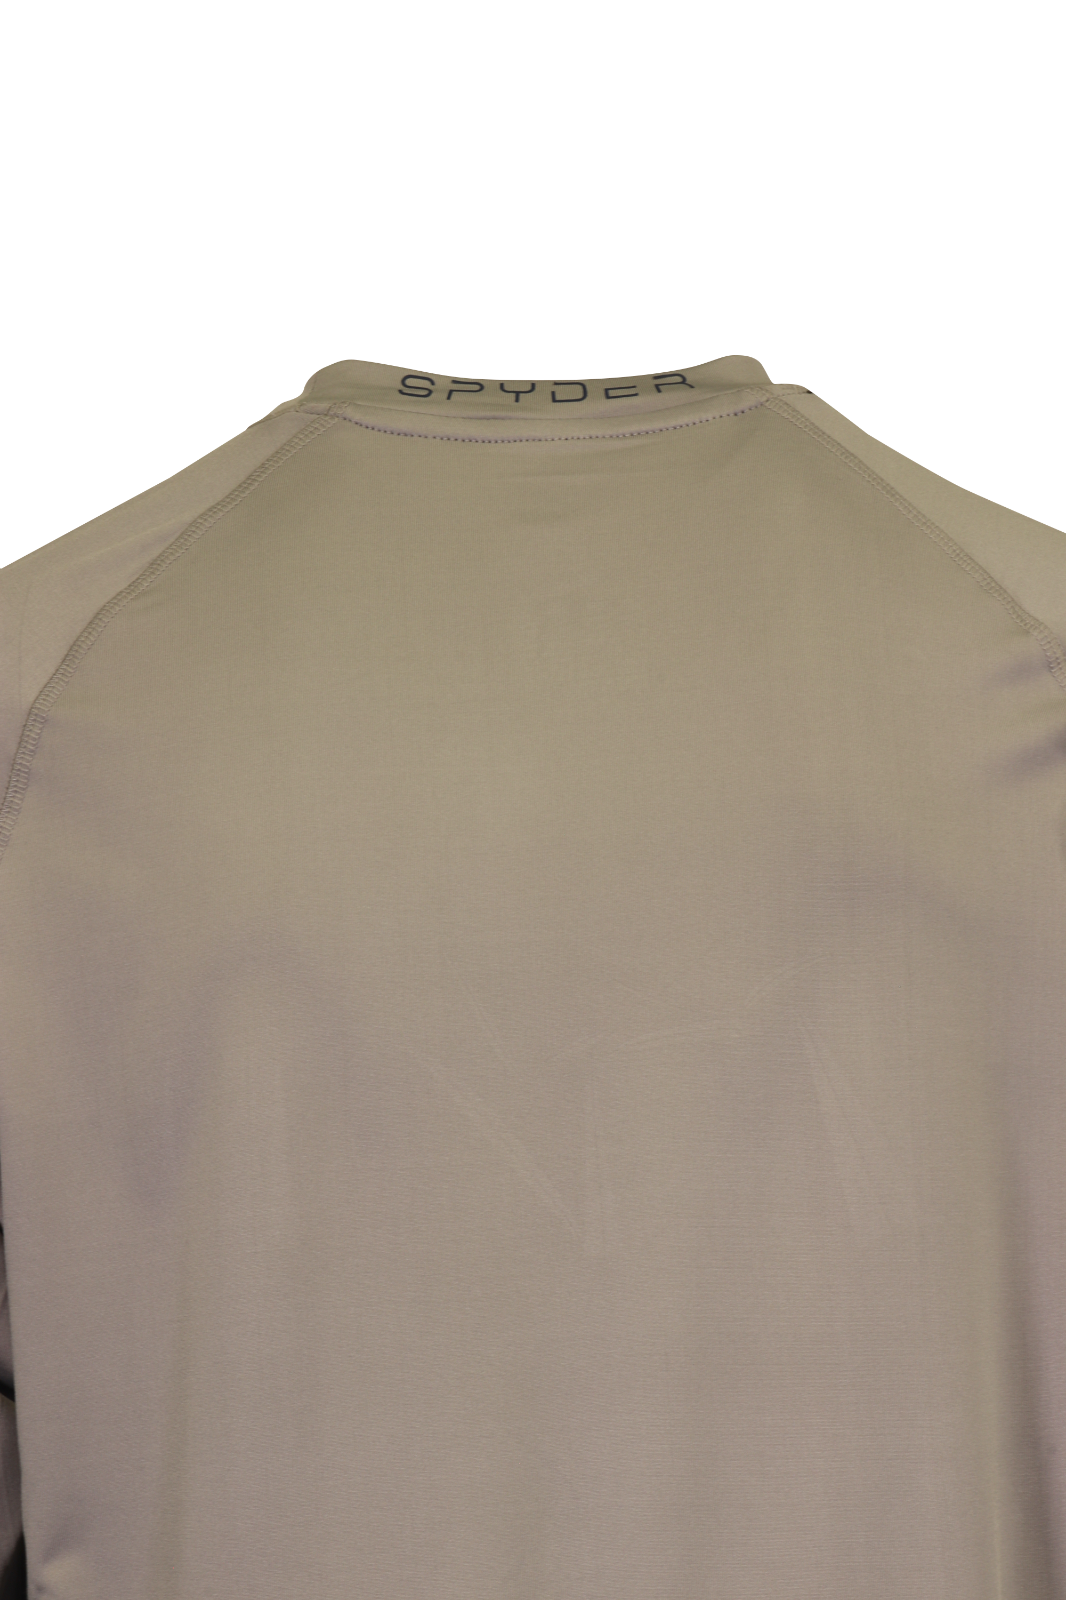 Spyder Men's T-Shirt Grey UPF30+ Rash Guard L/S (S01E)